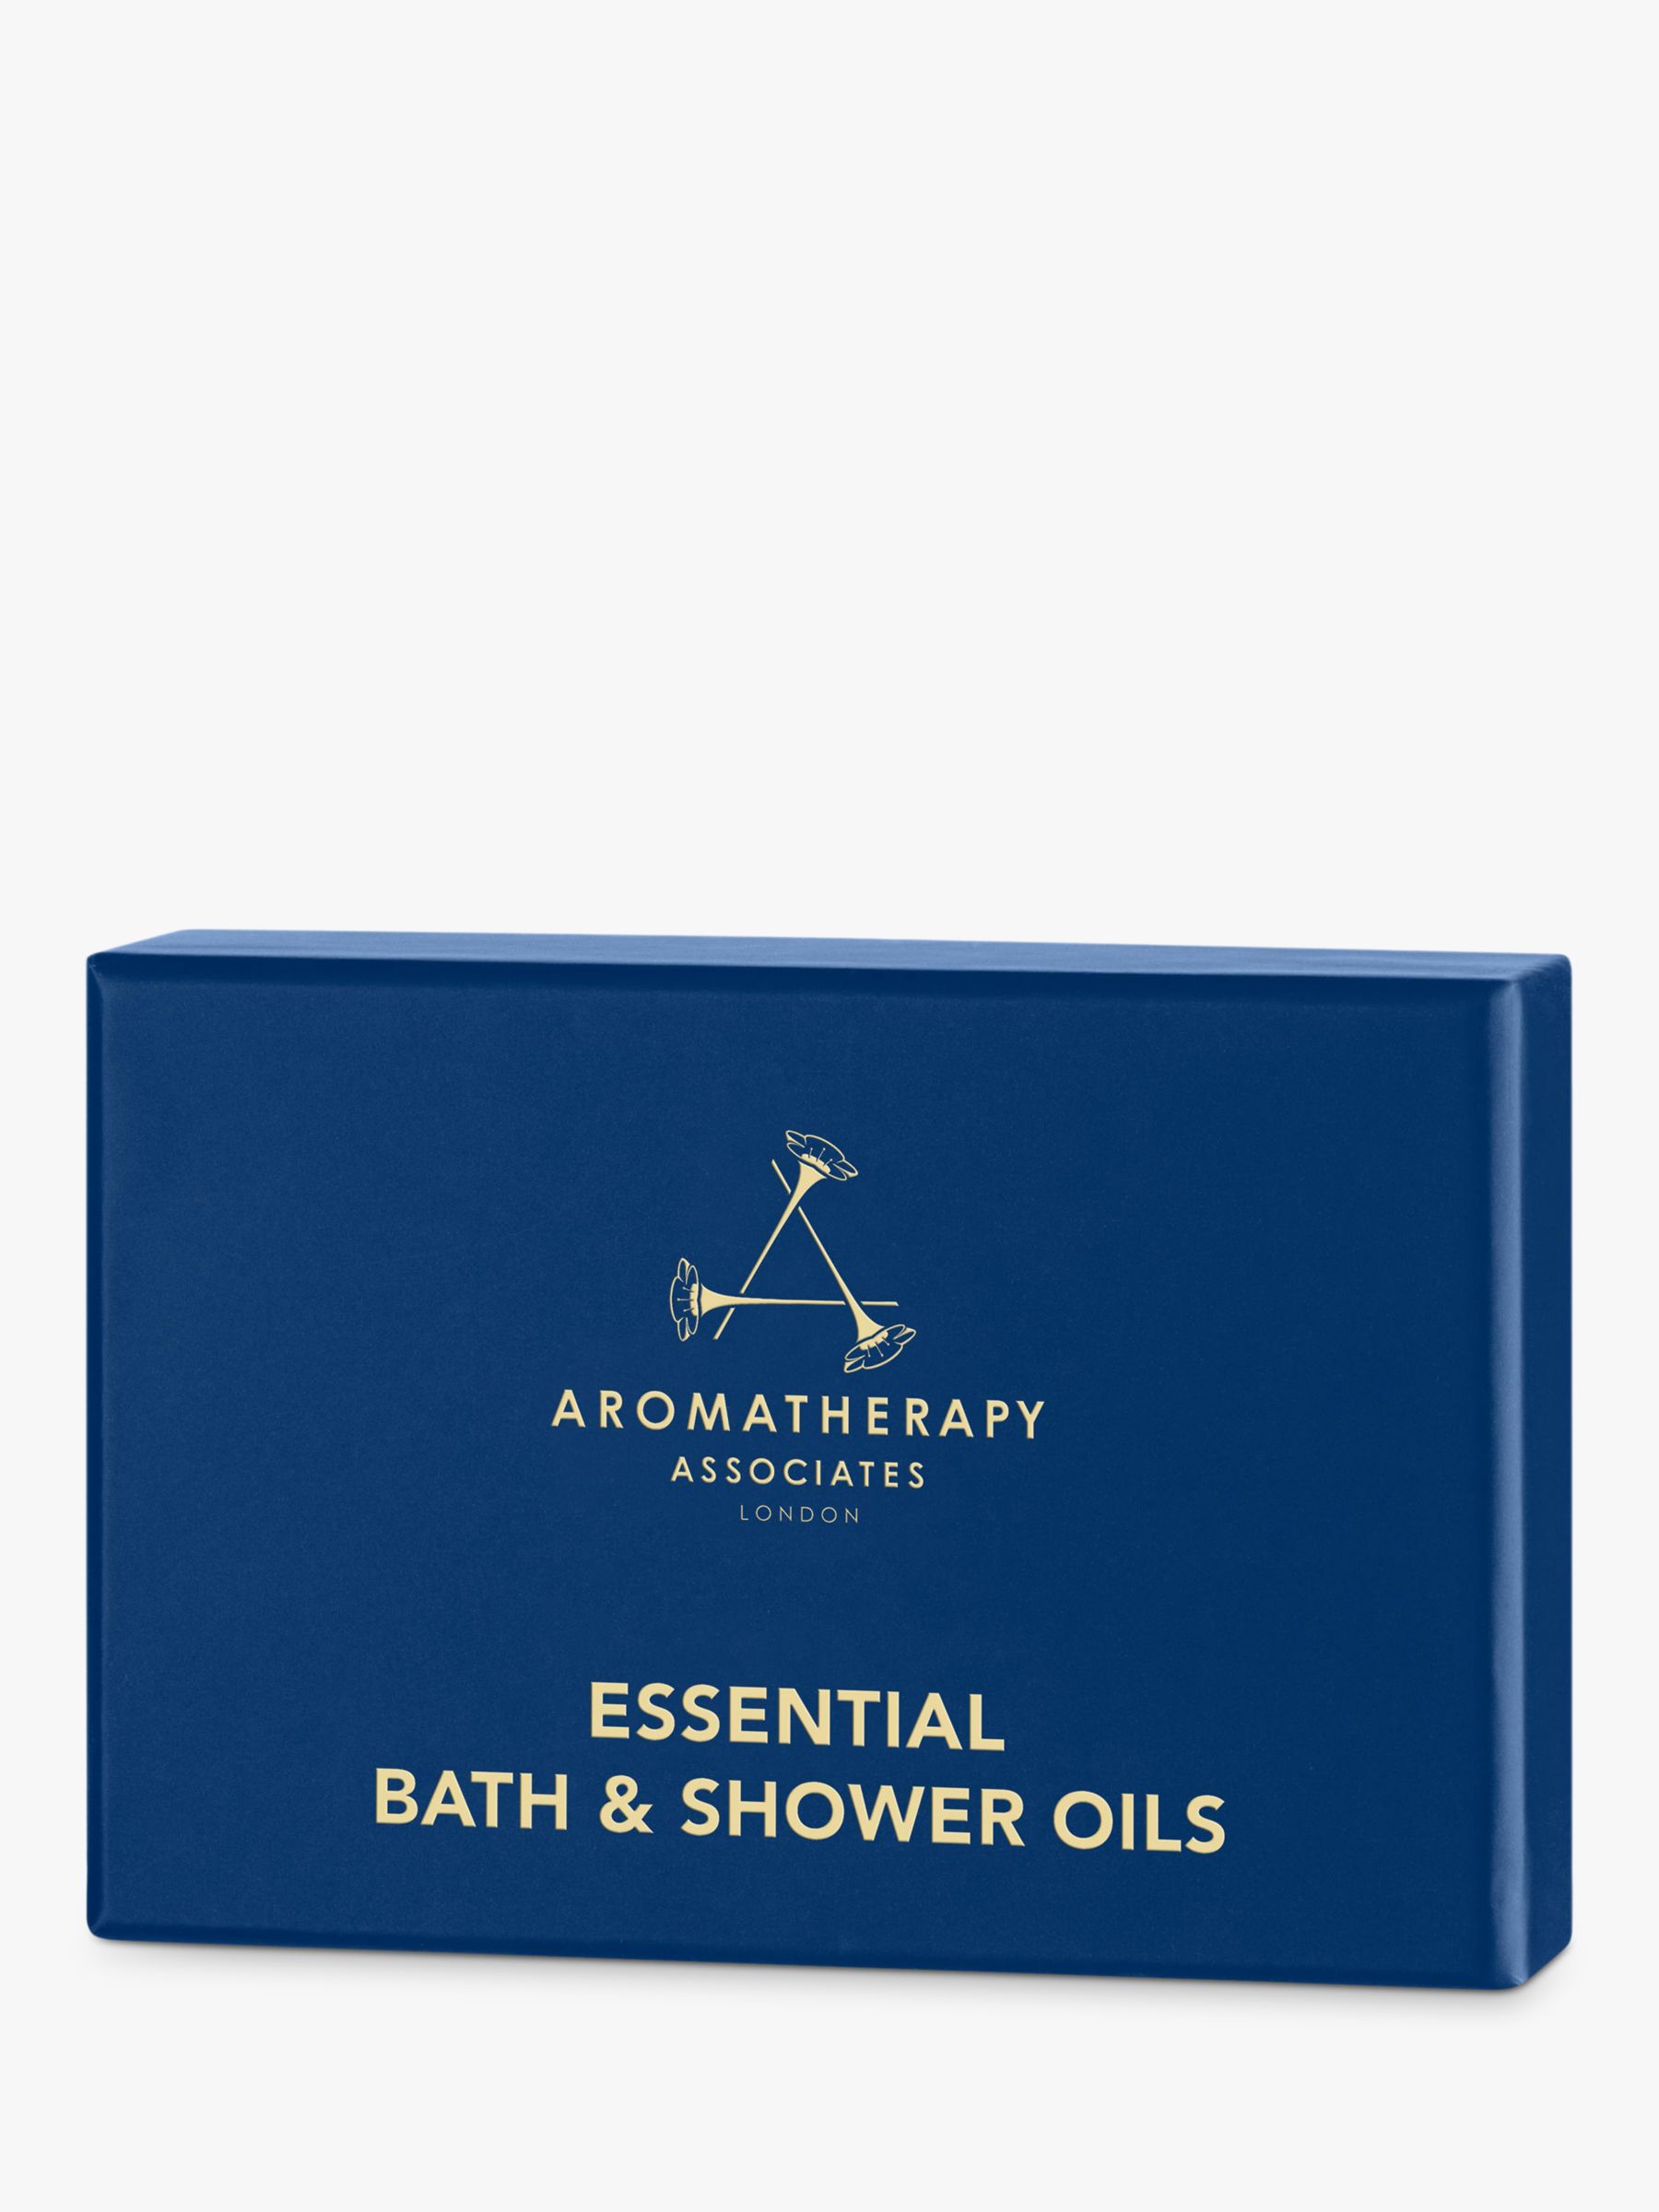 Aromatherapy Associates Bath & Shower Oil Gift Set 3